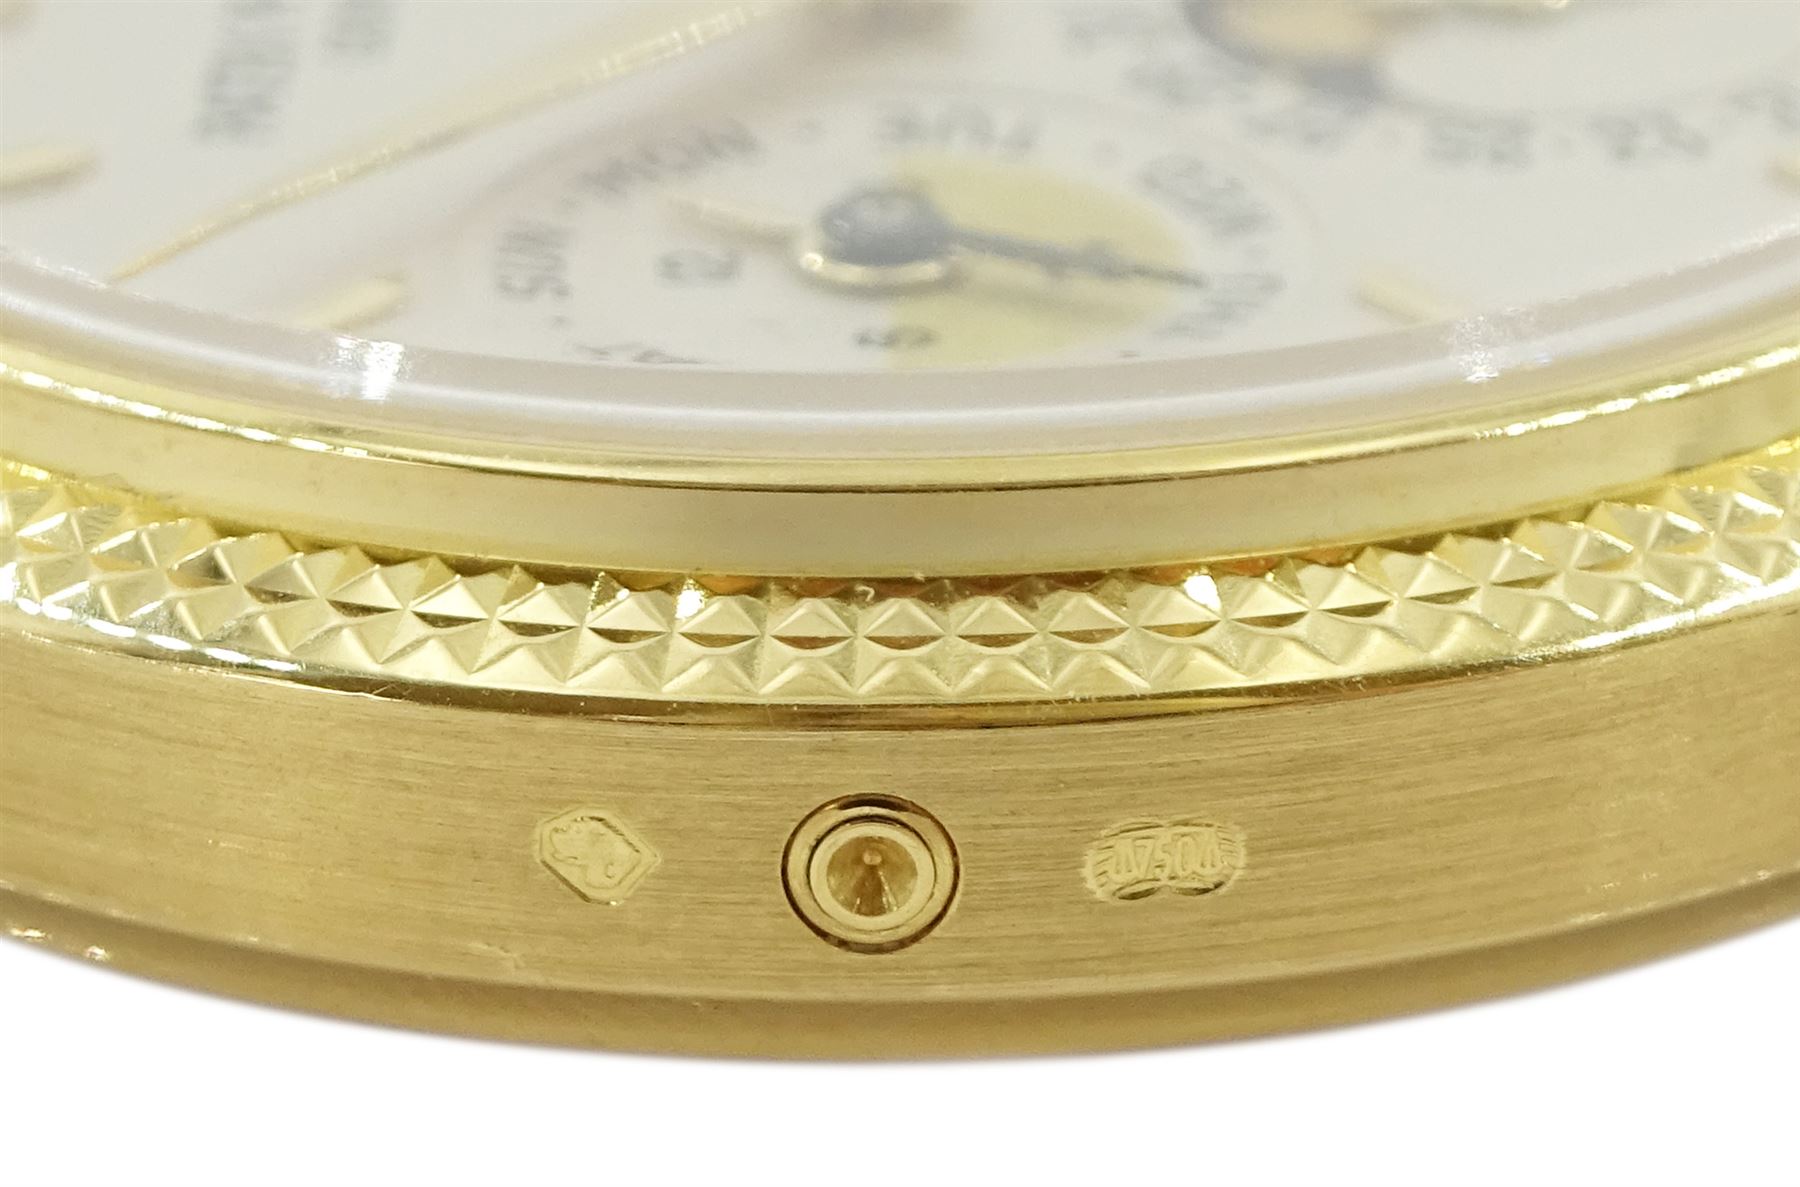 Patek Philippe 18ct gold perpetual calendar automatic wristwatch - Image 6 of 21